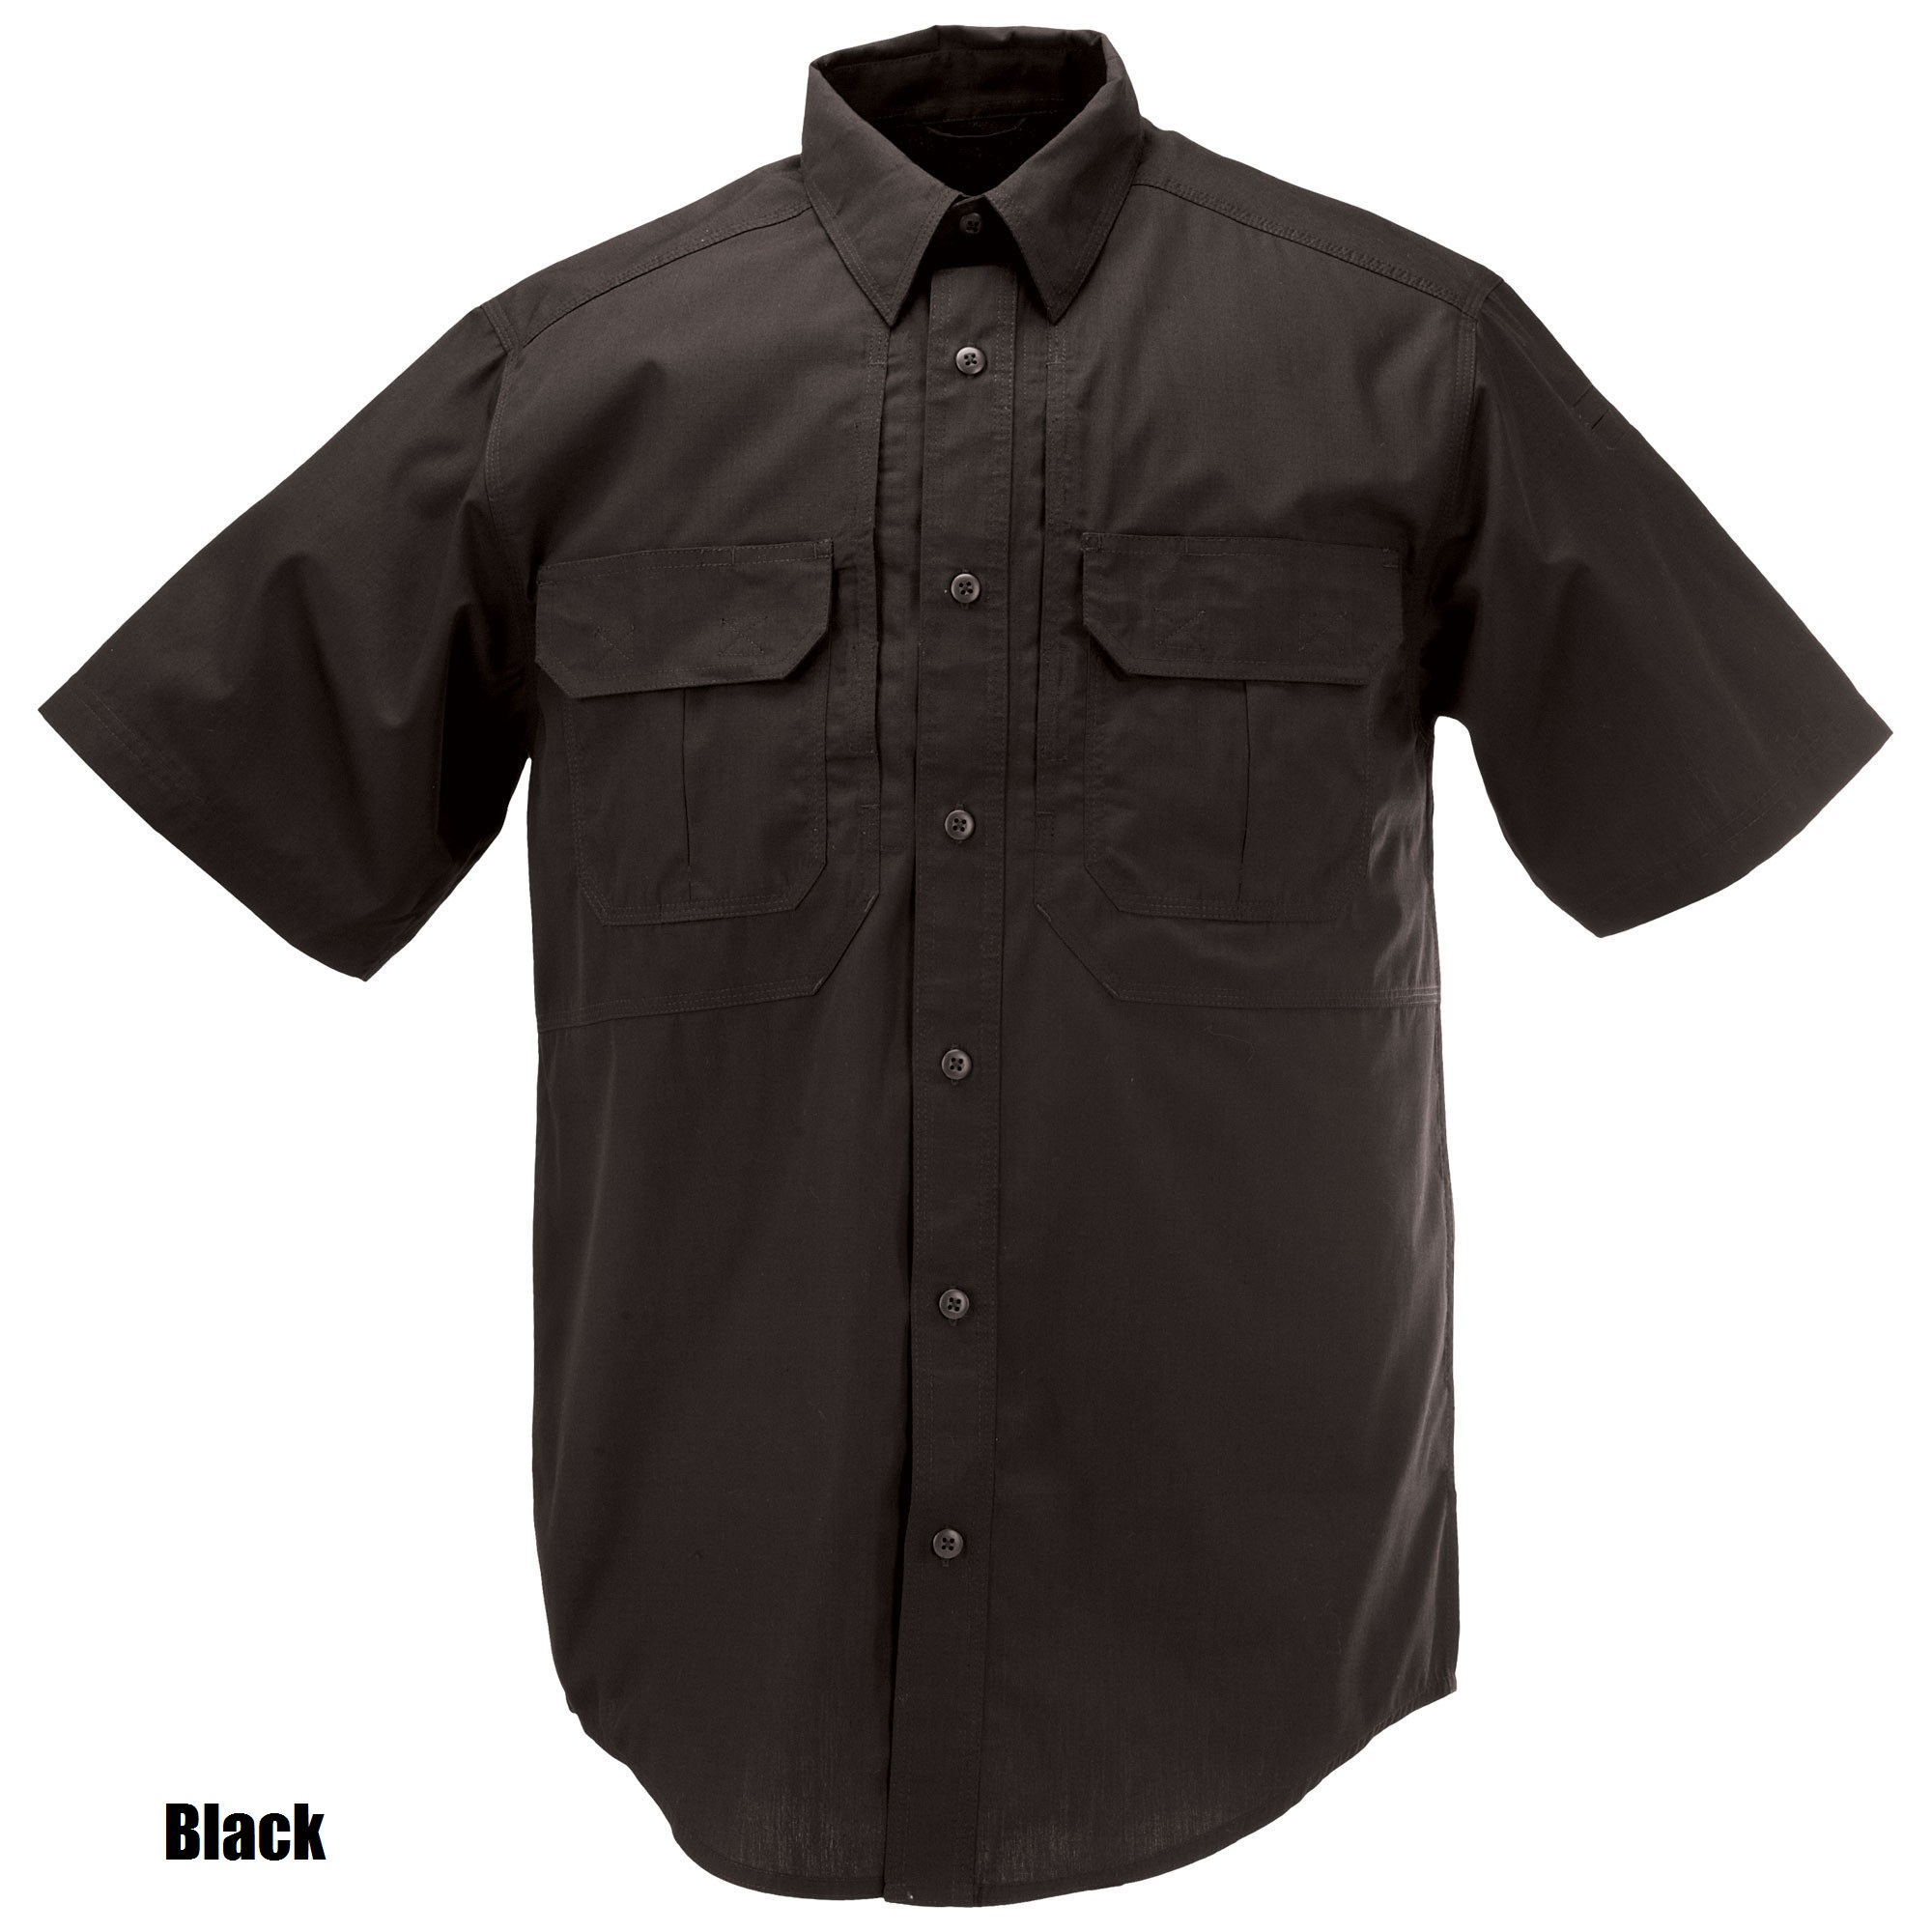 5.11 Taclite Pro Shirt – Short Sleeve